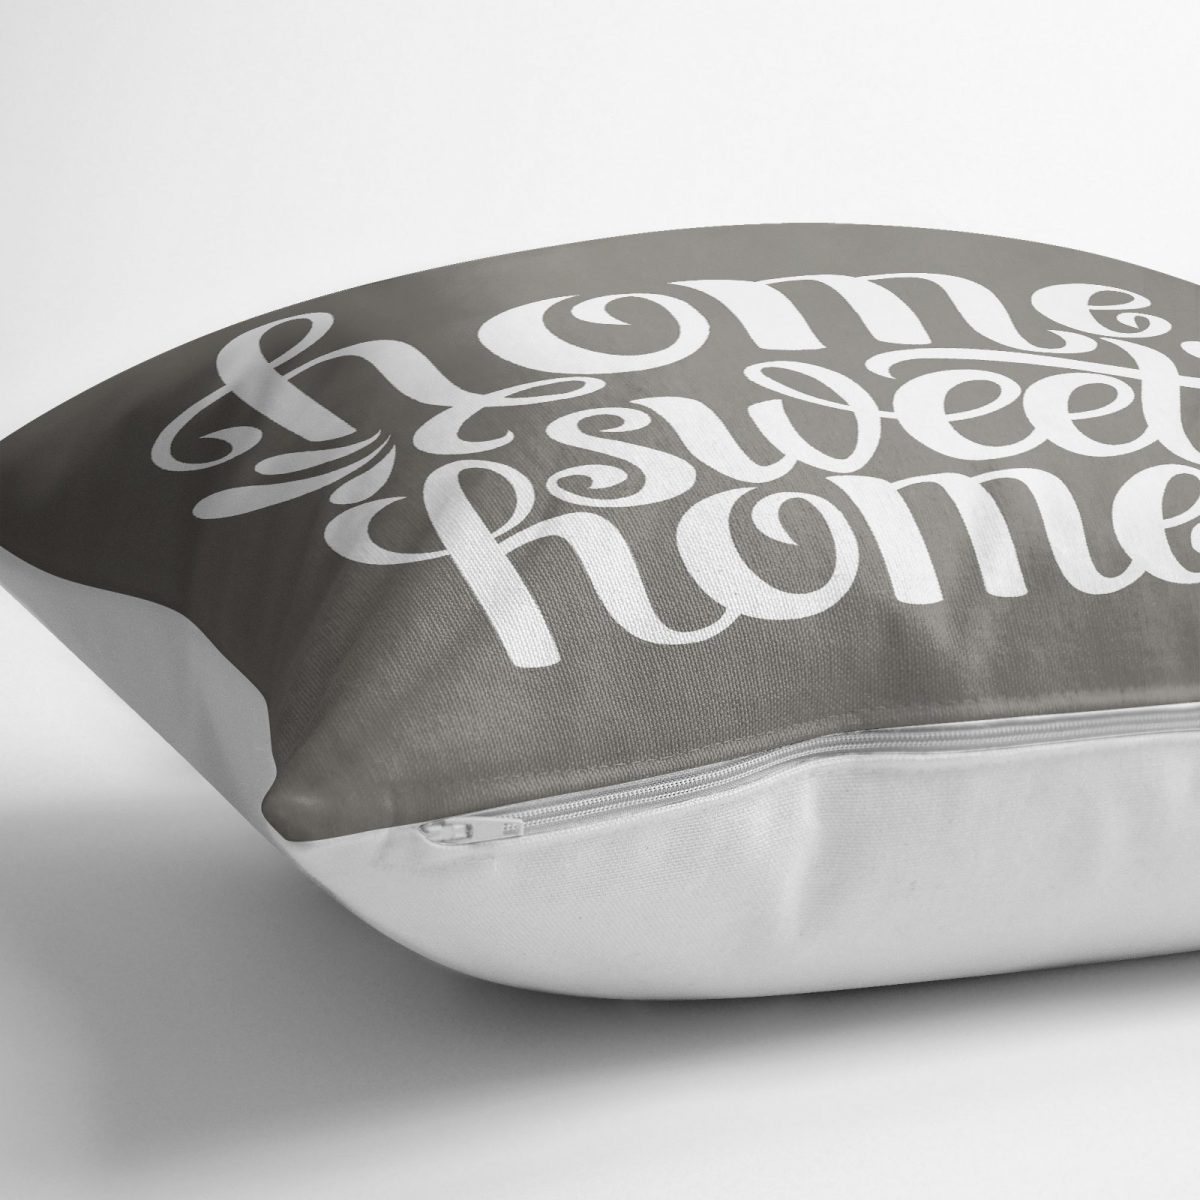 Home Sweet Home Dijital Baskılı Dekoratif Yer Minderi - 70 x 70 cm Realhomes